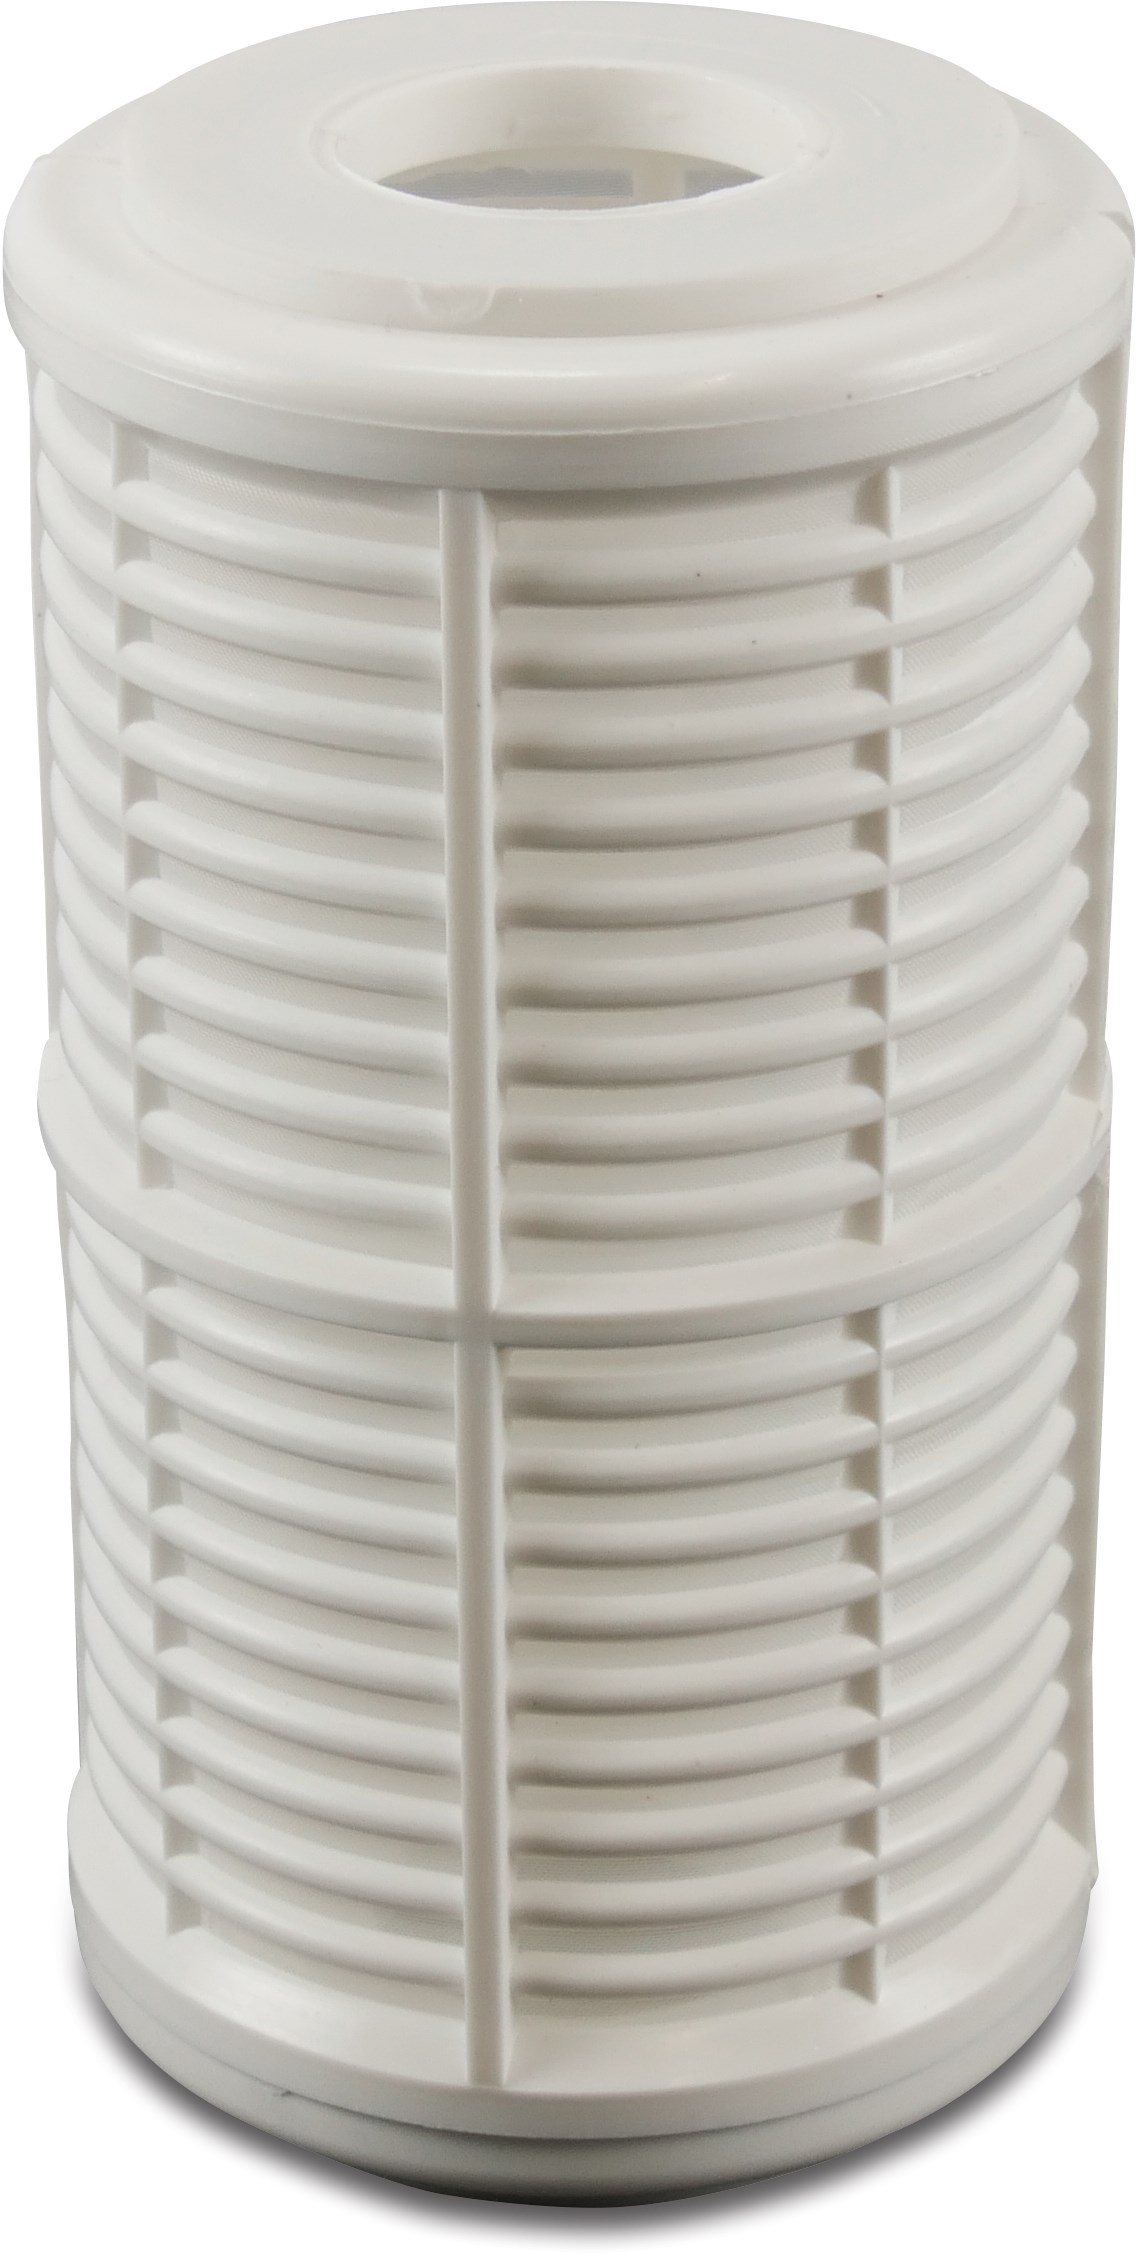 Filter cartridge nylon 60micron polyester gauze type 5" filter